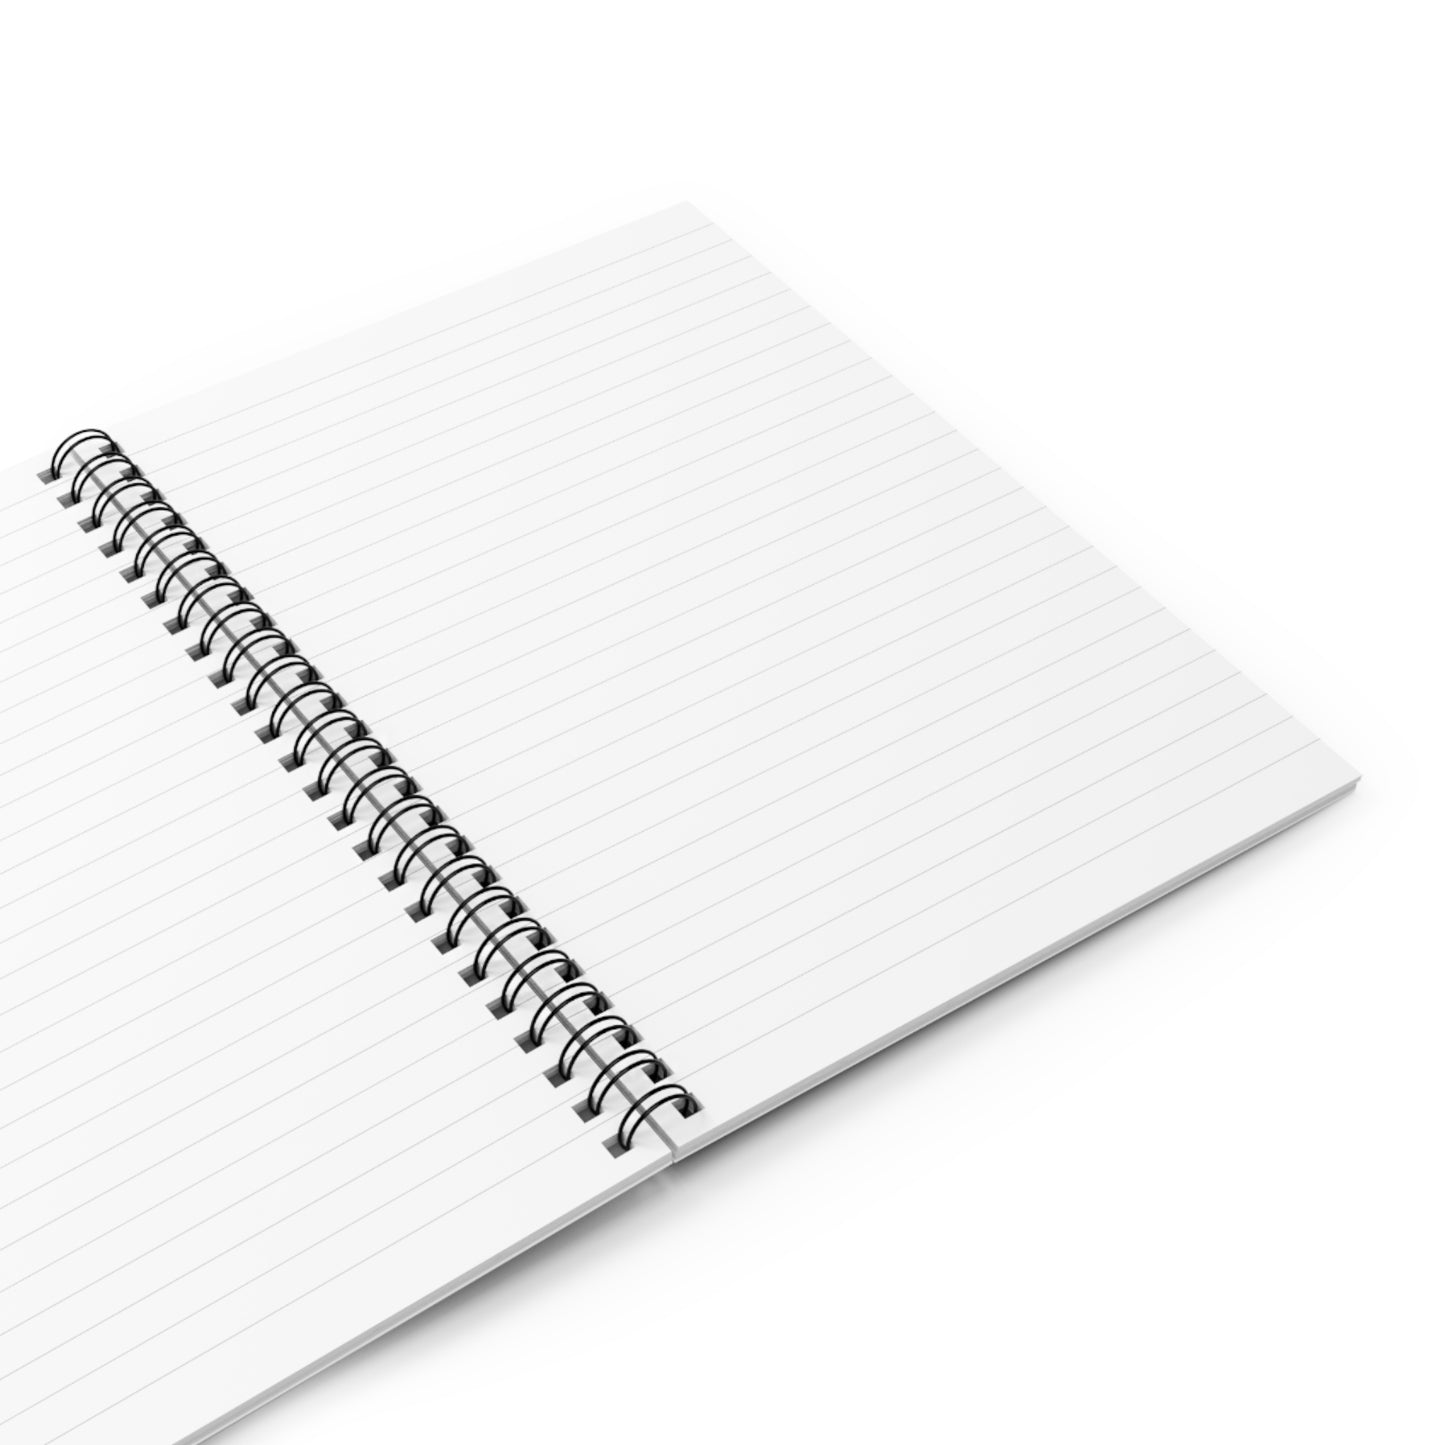 Cheatsheet Notebook - Tmux